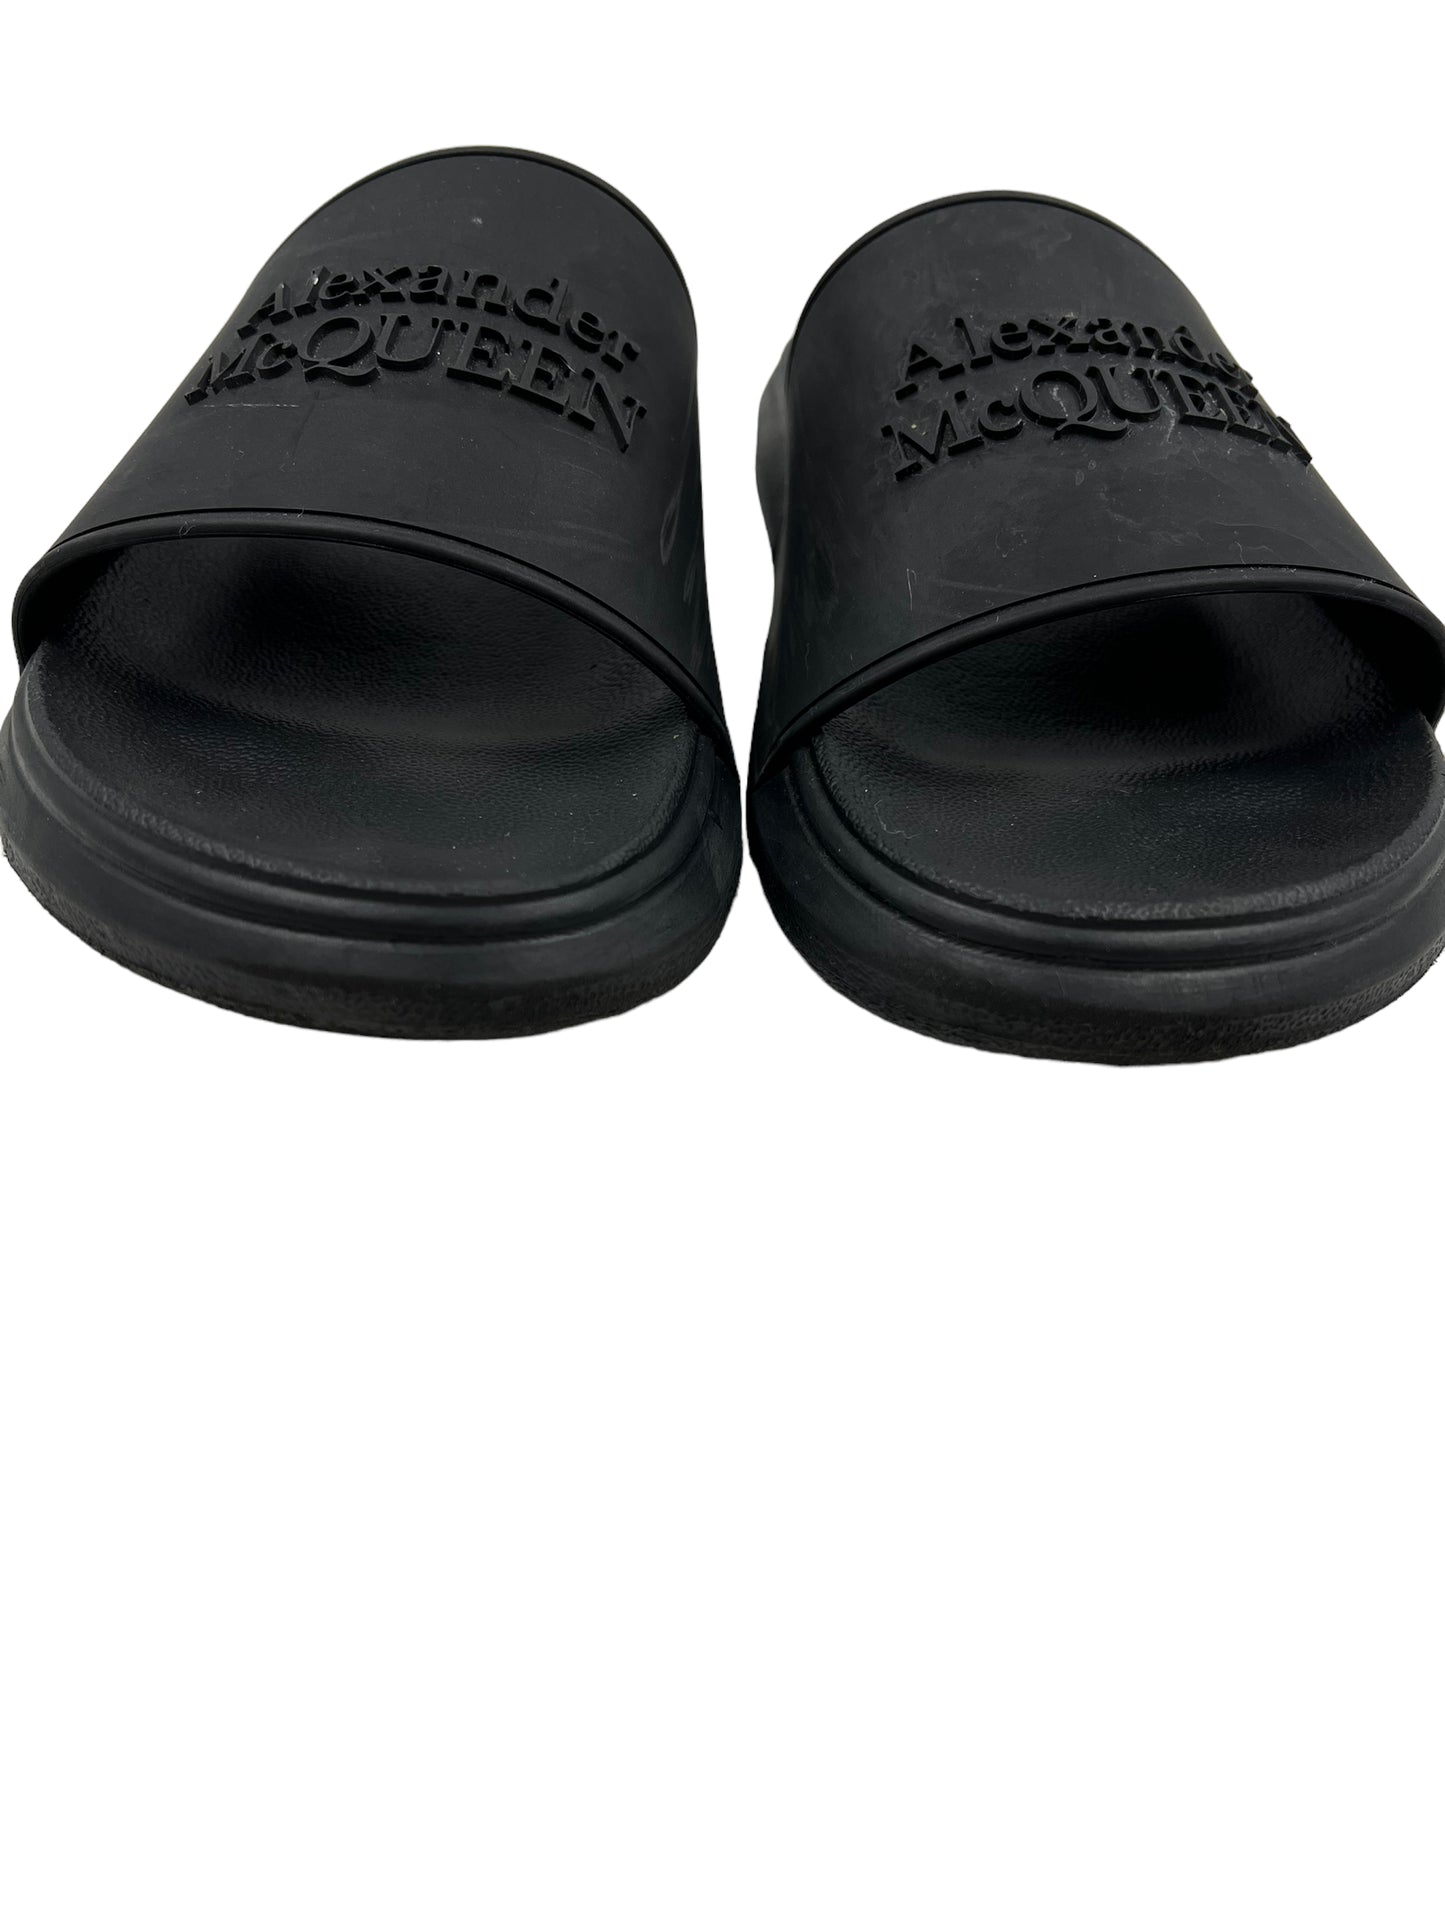 Alexander McQueen Size 40 Black Logo Pool Slides